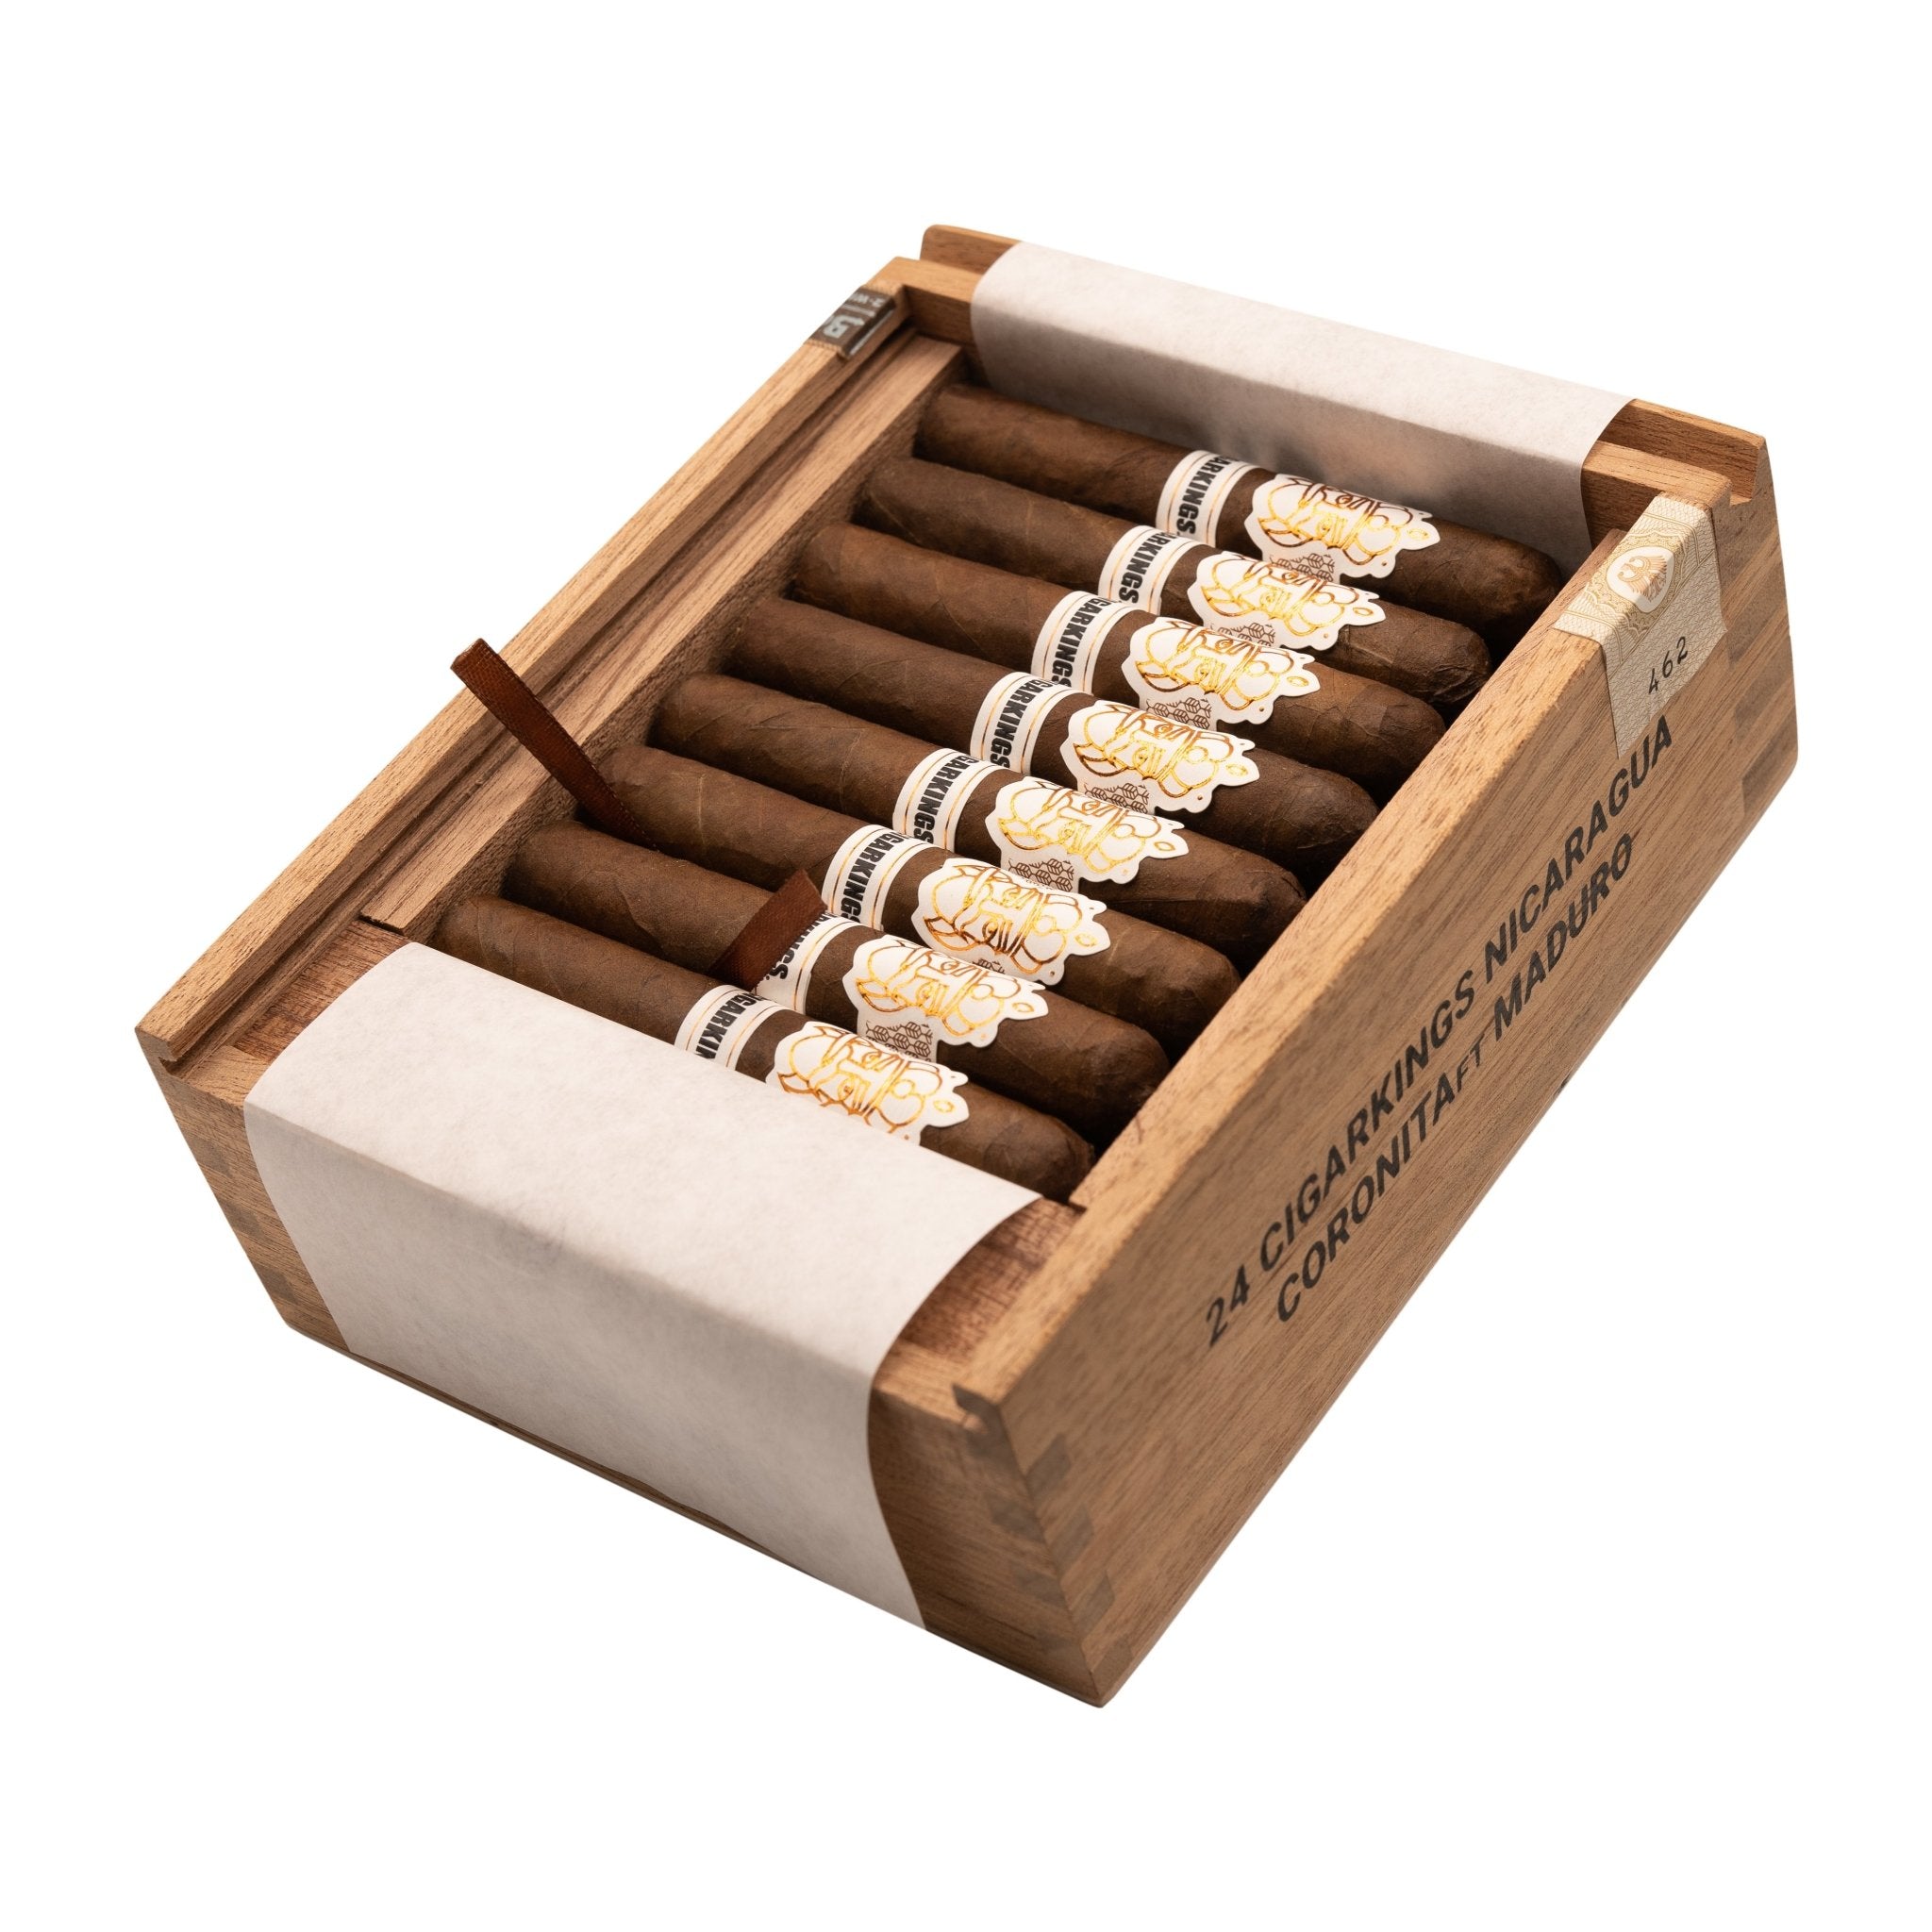 Coronita FT Maduro - CigarKings GmbH